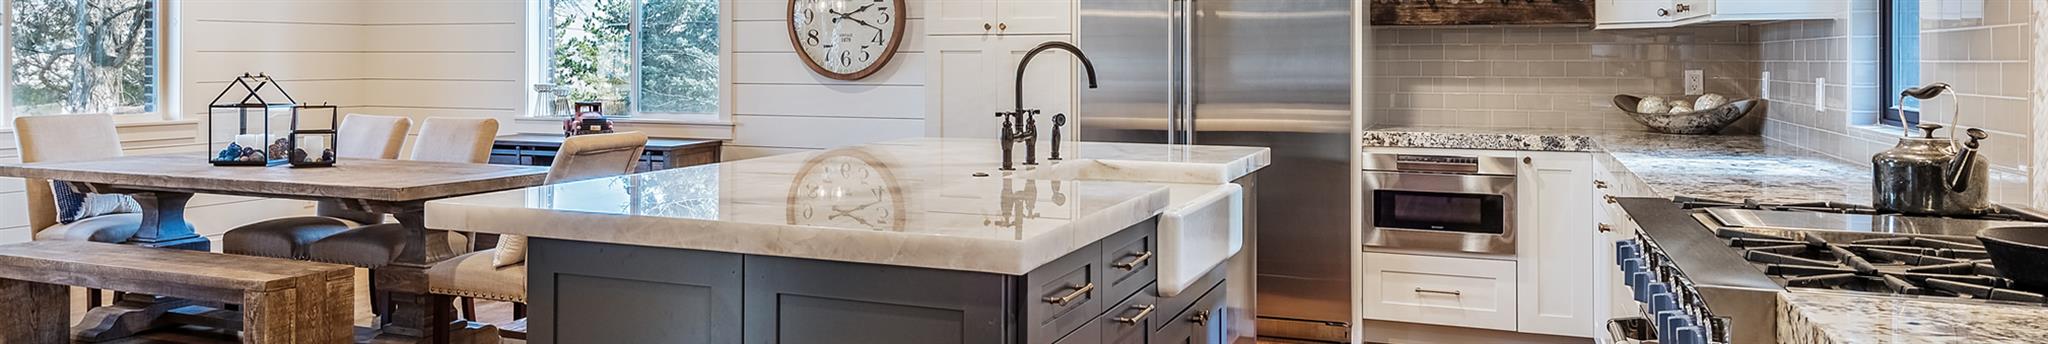 Bathroom Design and Remodeling Ideas With Denver Granite